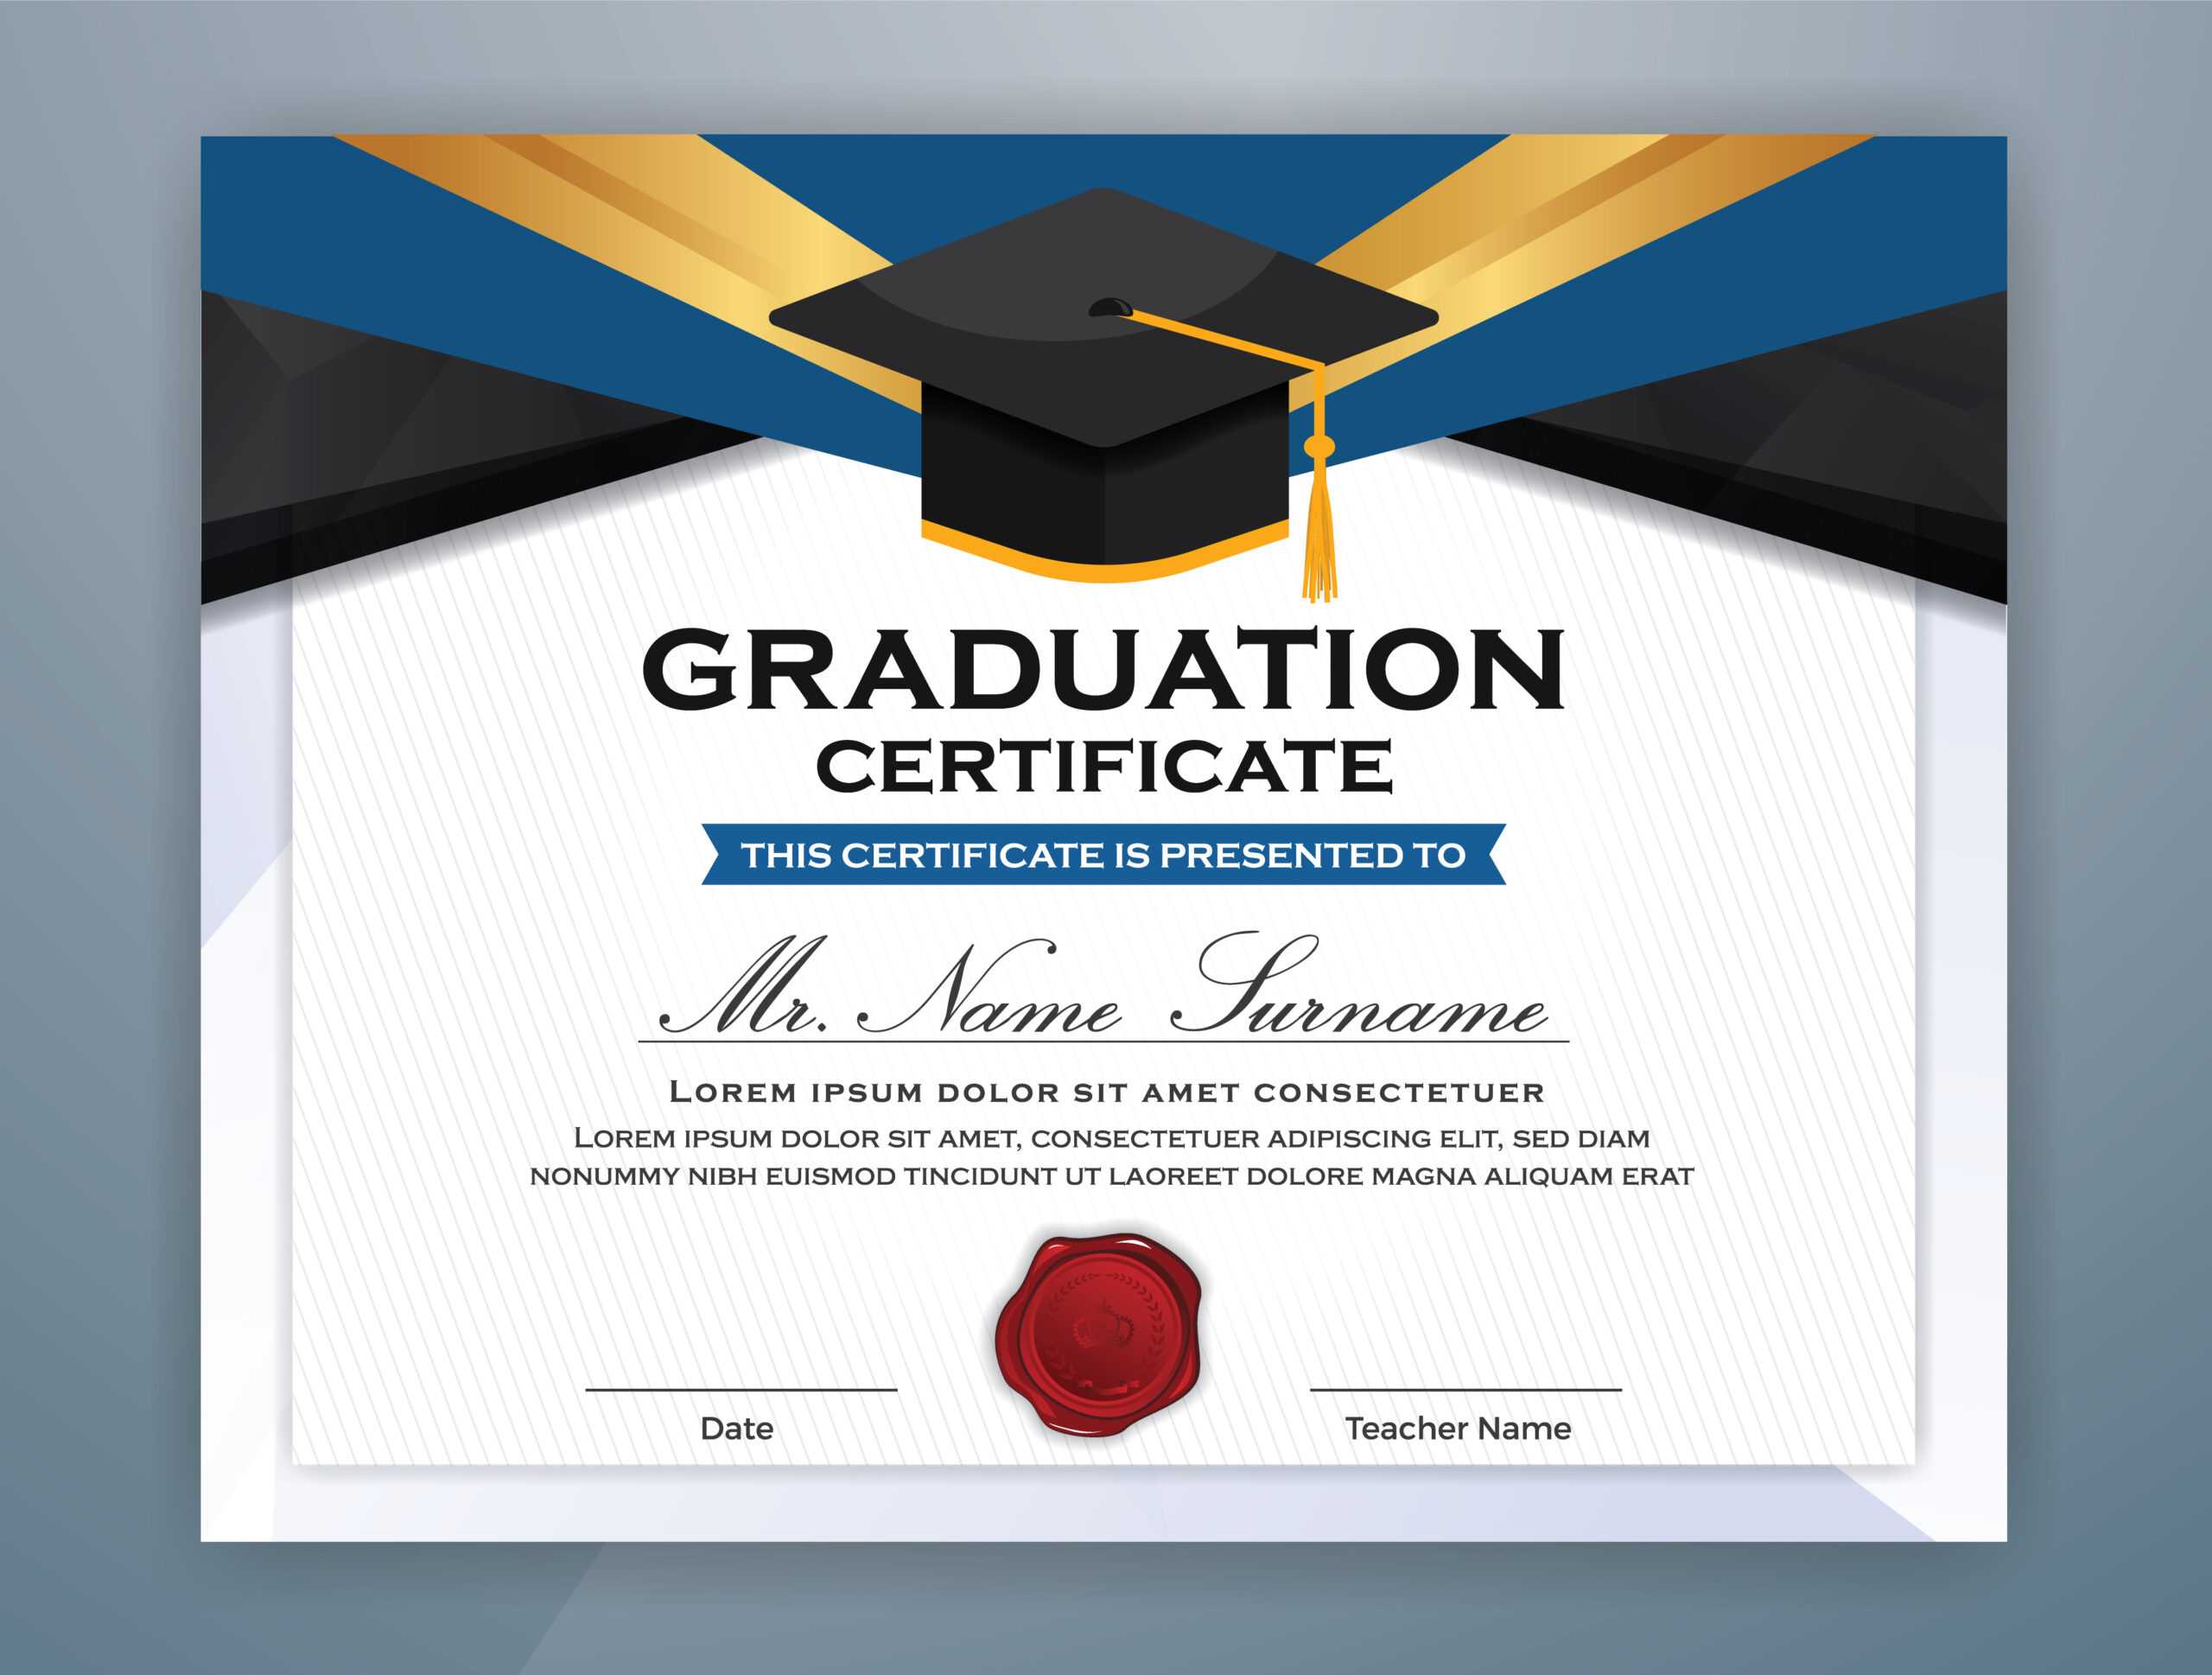 Graduation Certificate Free Vector Art – (4,527 Free Downloads) Throughout University Graduation Certificate Template